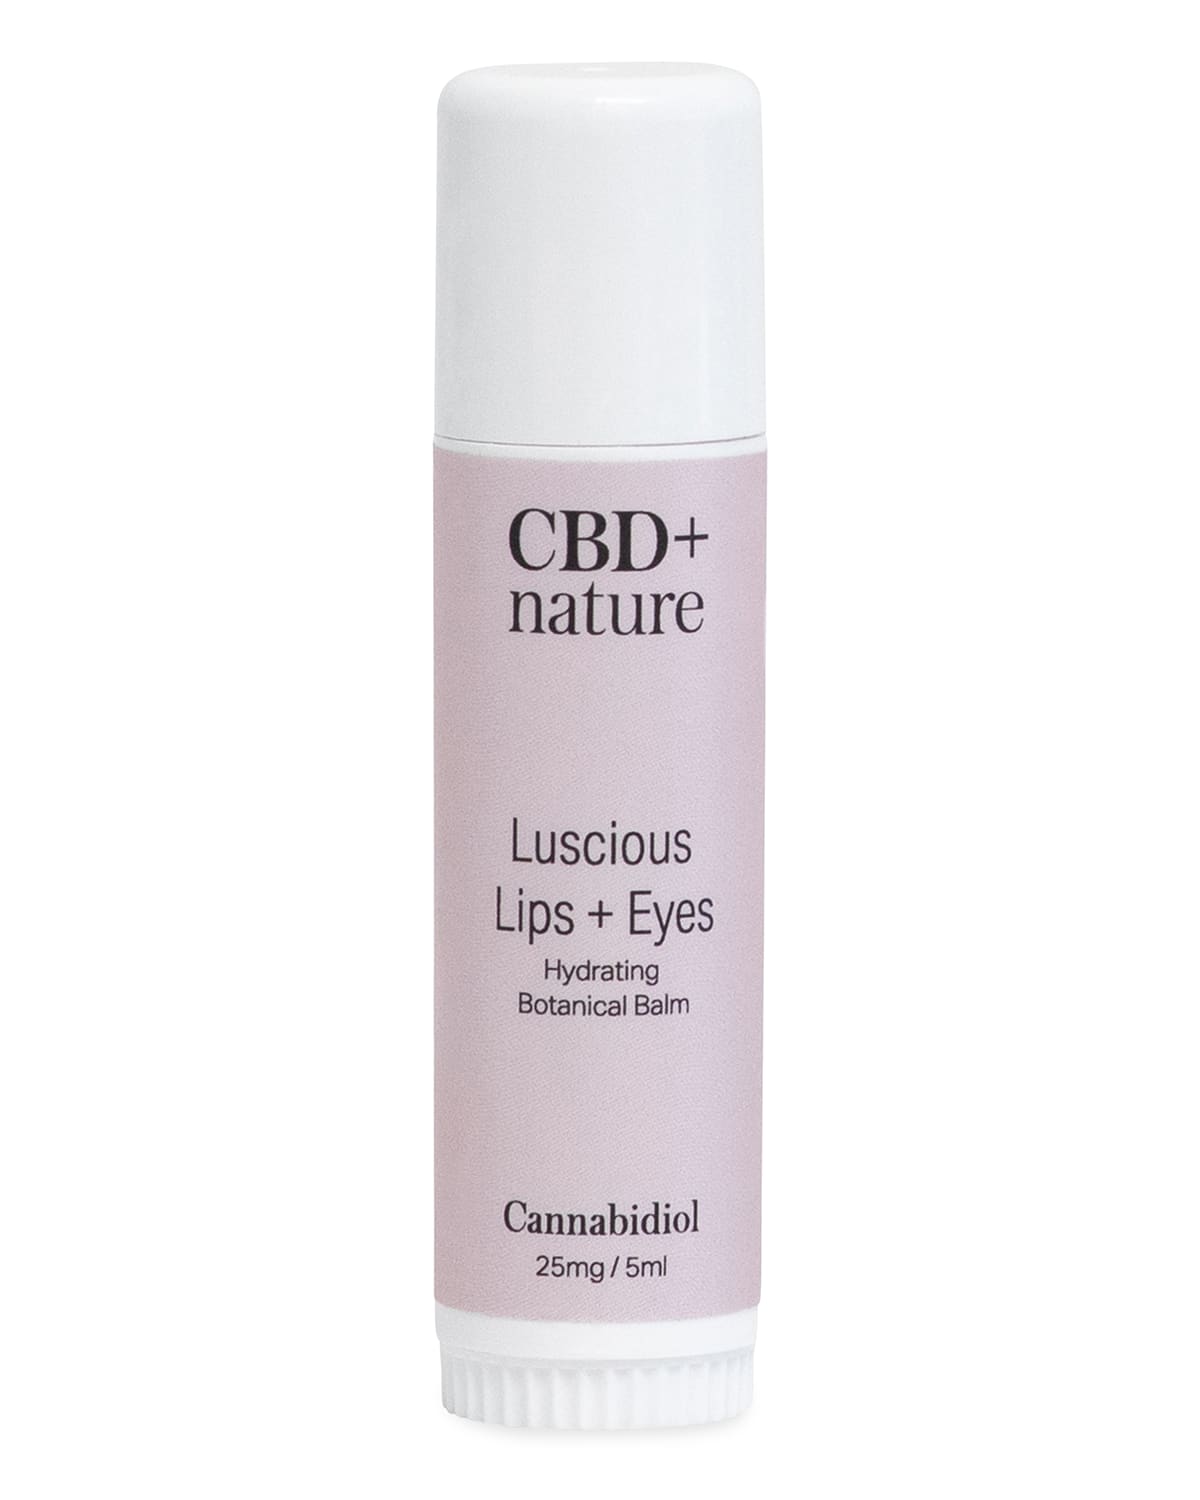 0.16 oz. Luscious Lips + Eyes Botanical Balm